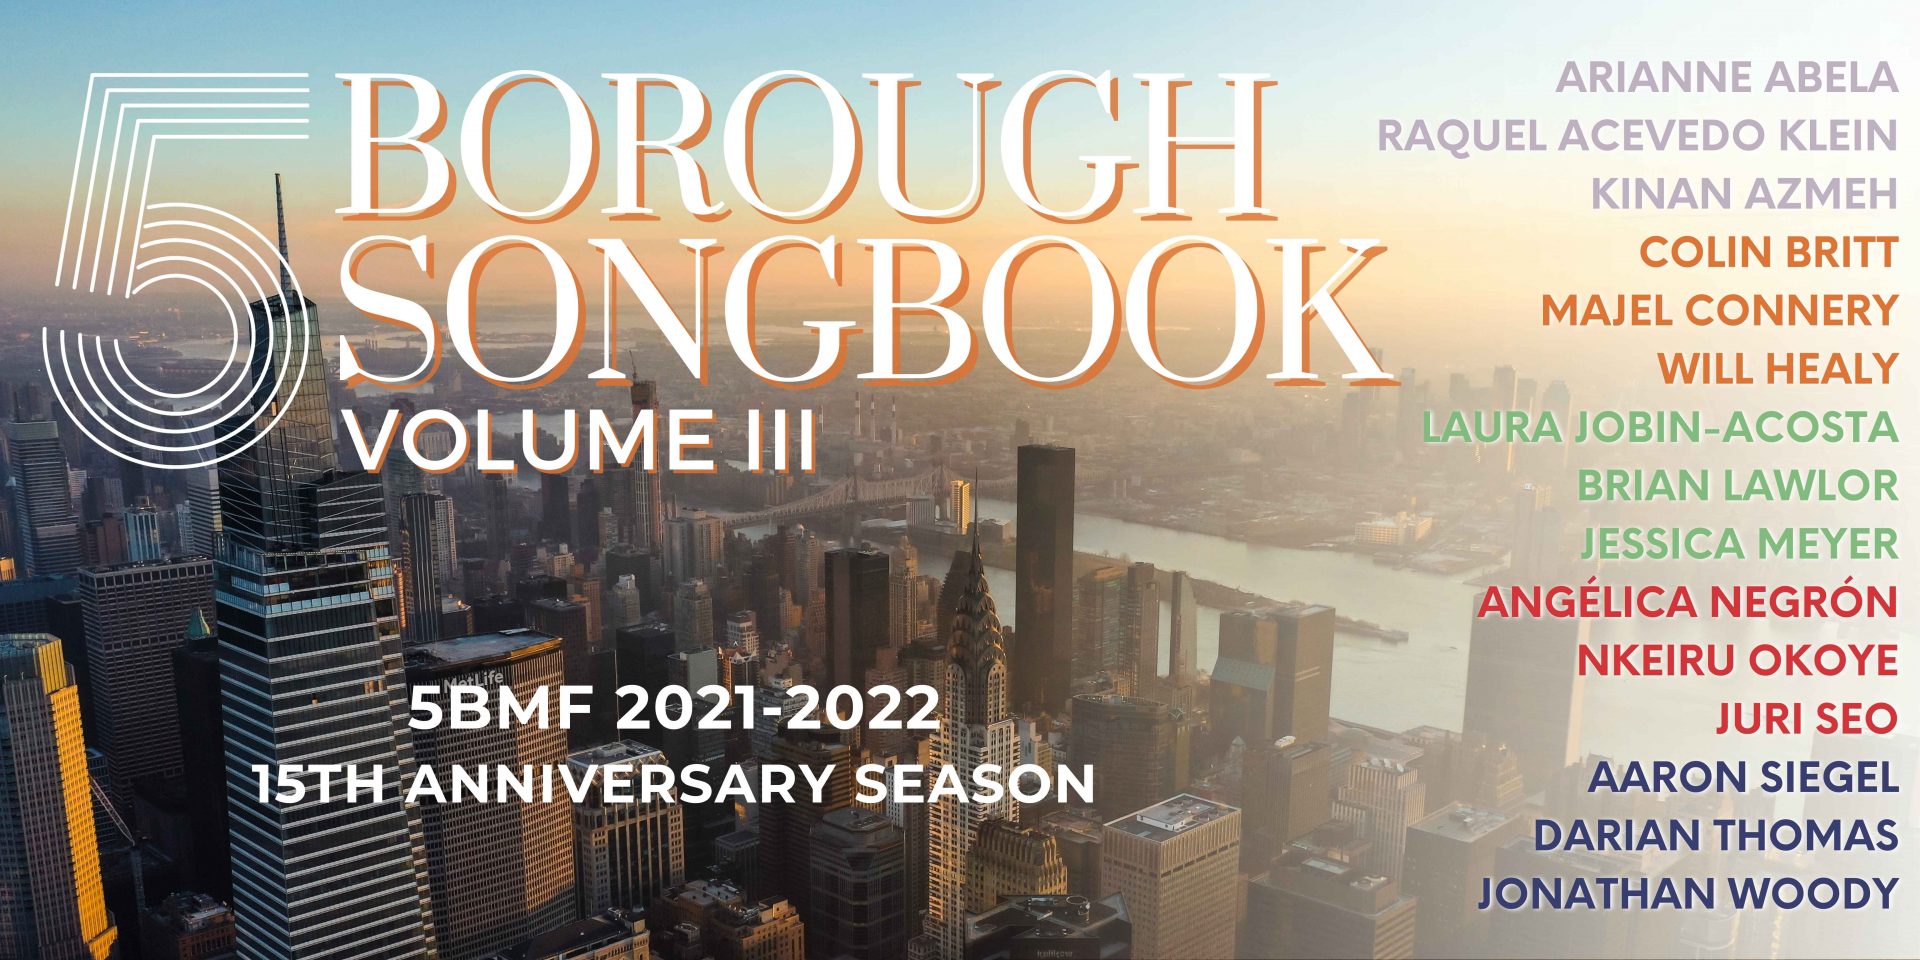 Five Borough Songbook Vol III